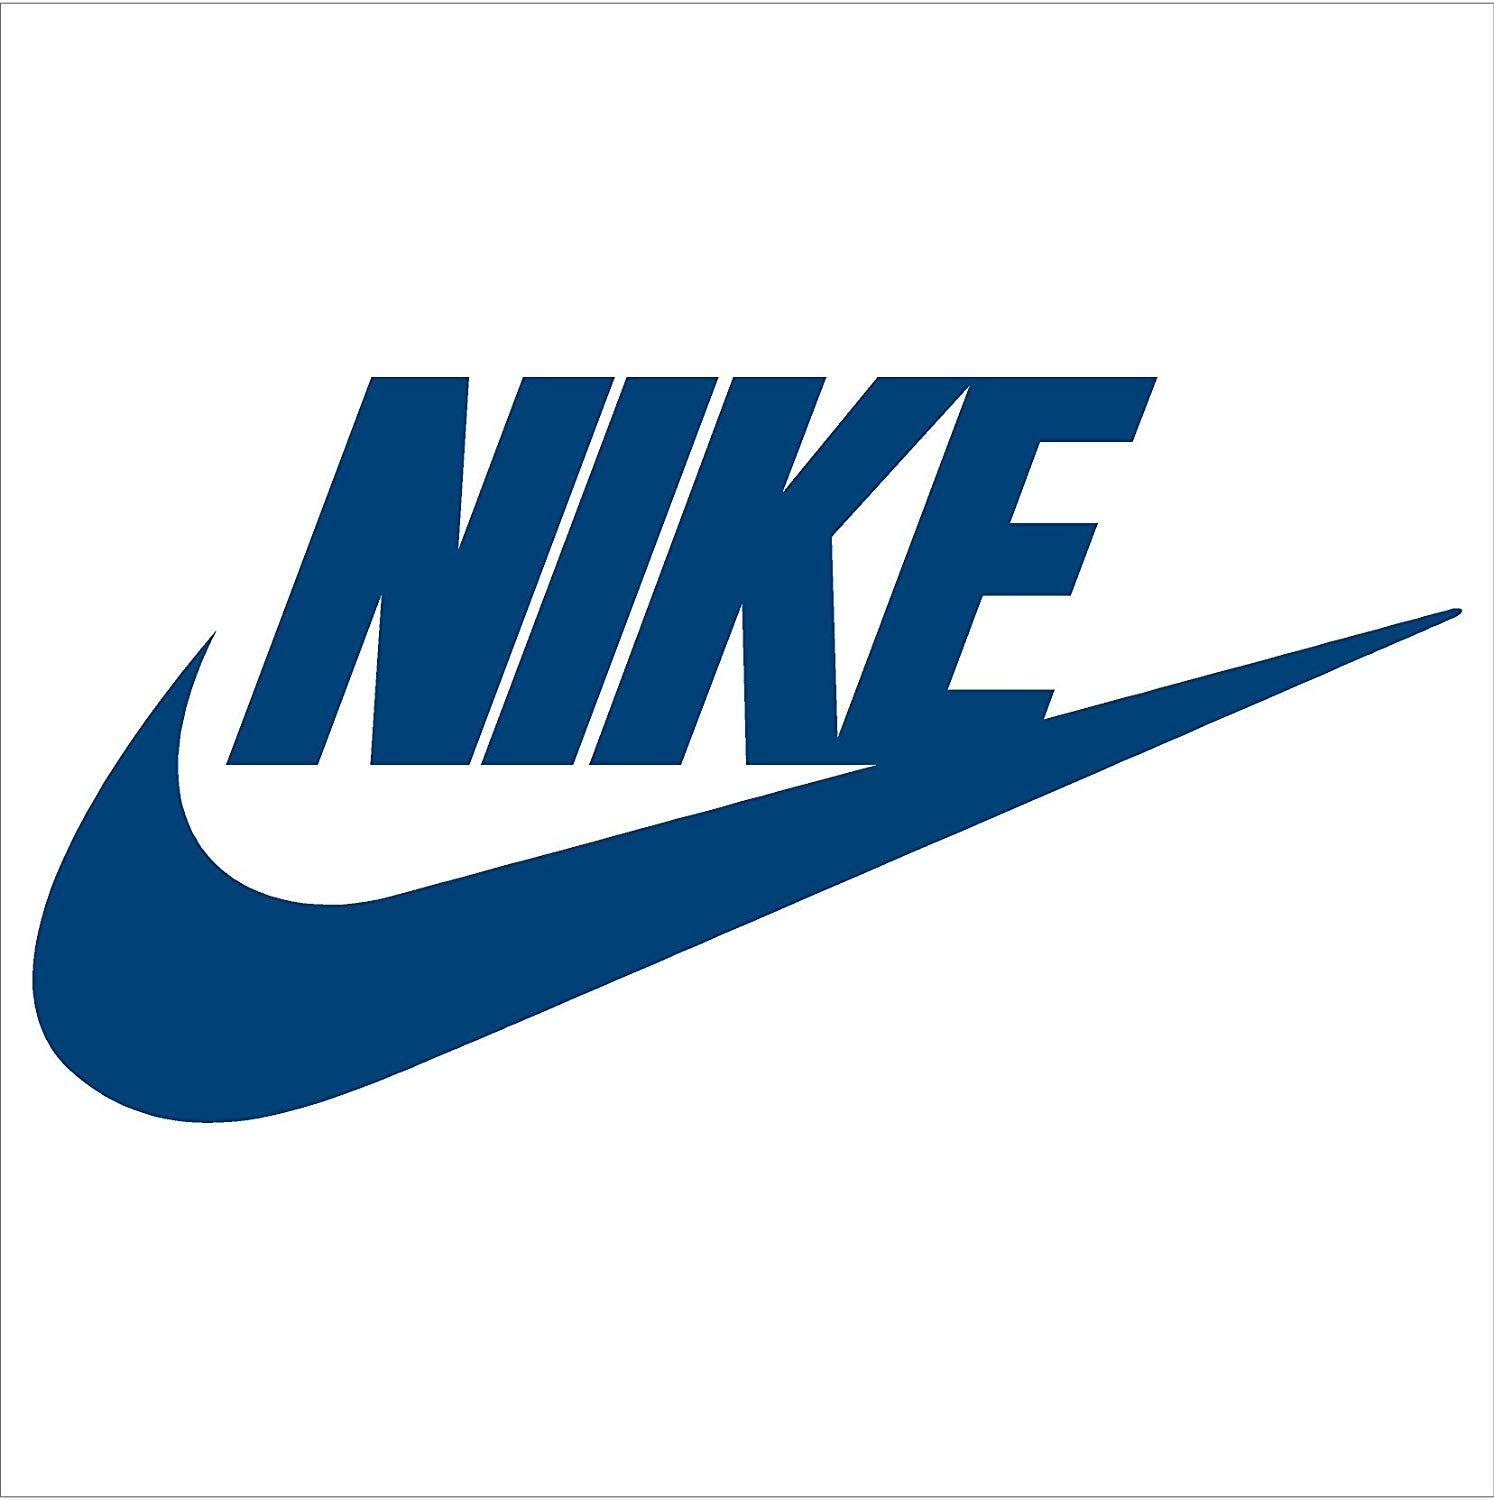 Nilke Logo - Nike Swoosh Logo Vinyl Sticker Decal-Orange-4 Inch